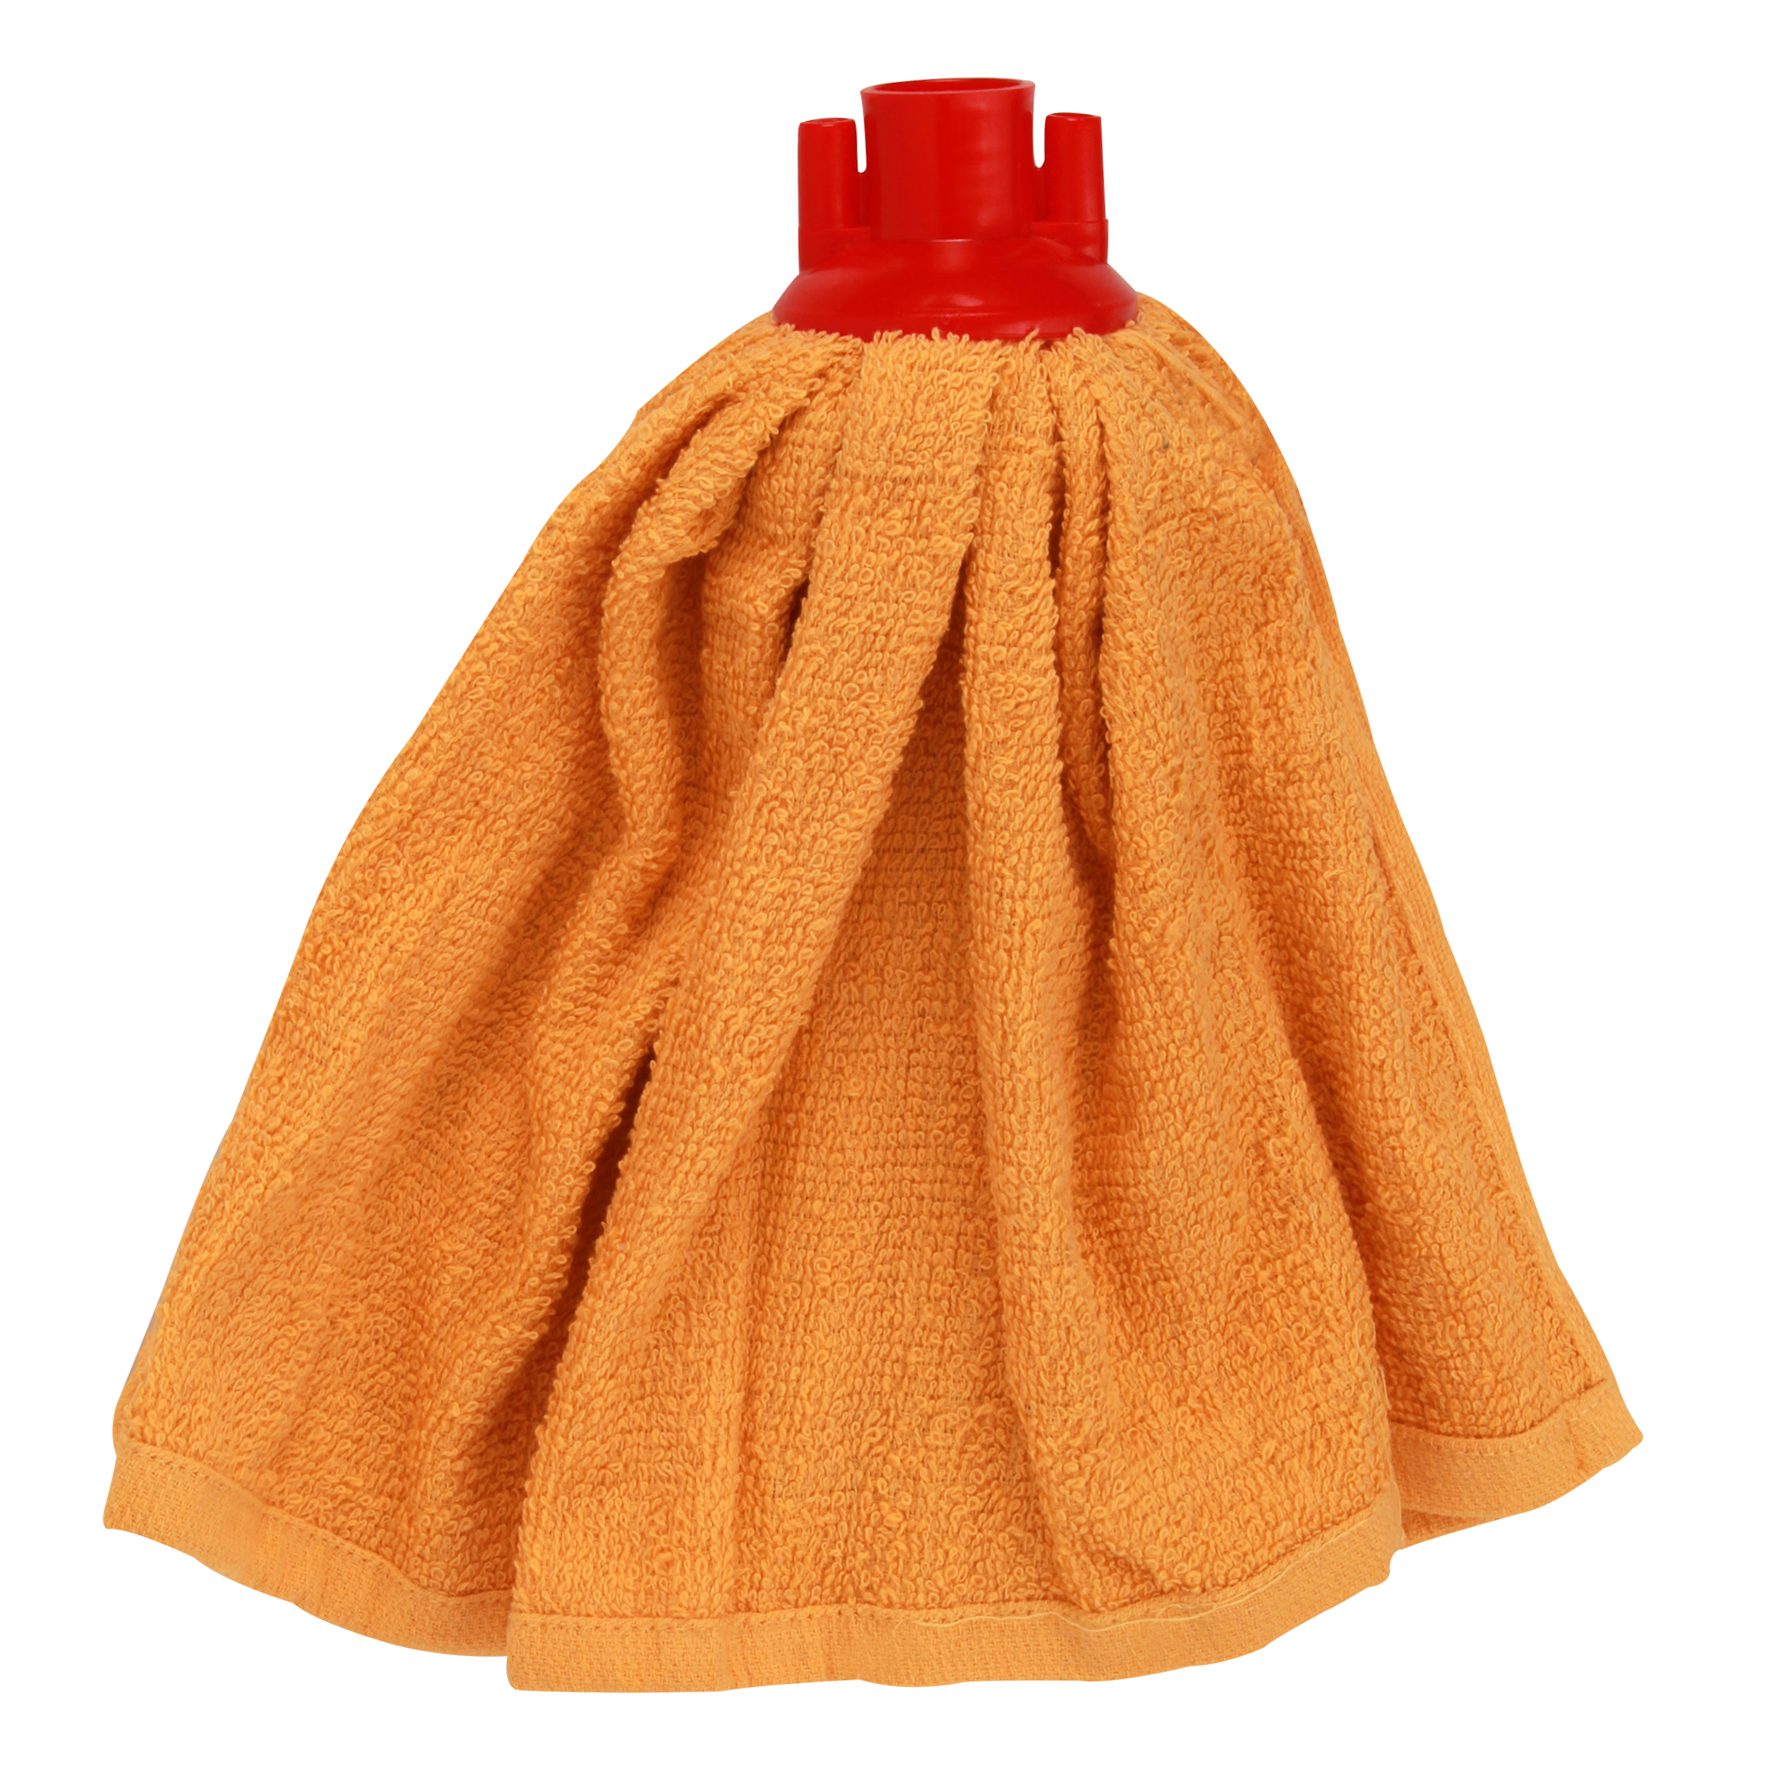 Household "skirt" type, sponge clothe mop, 100% cotton